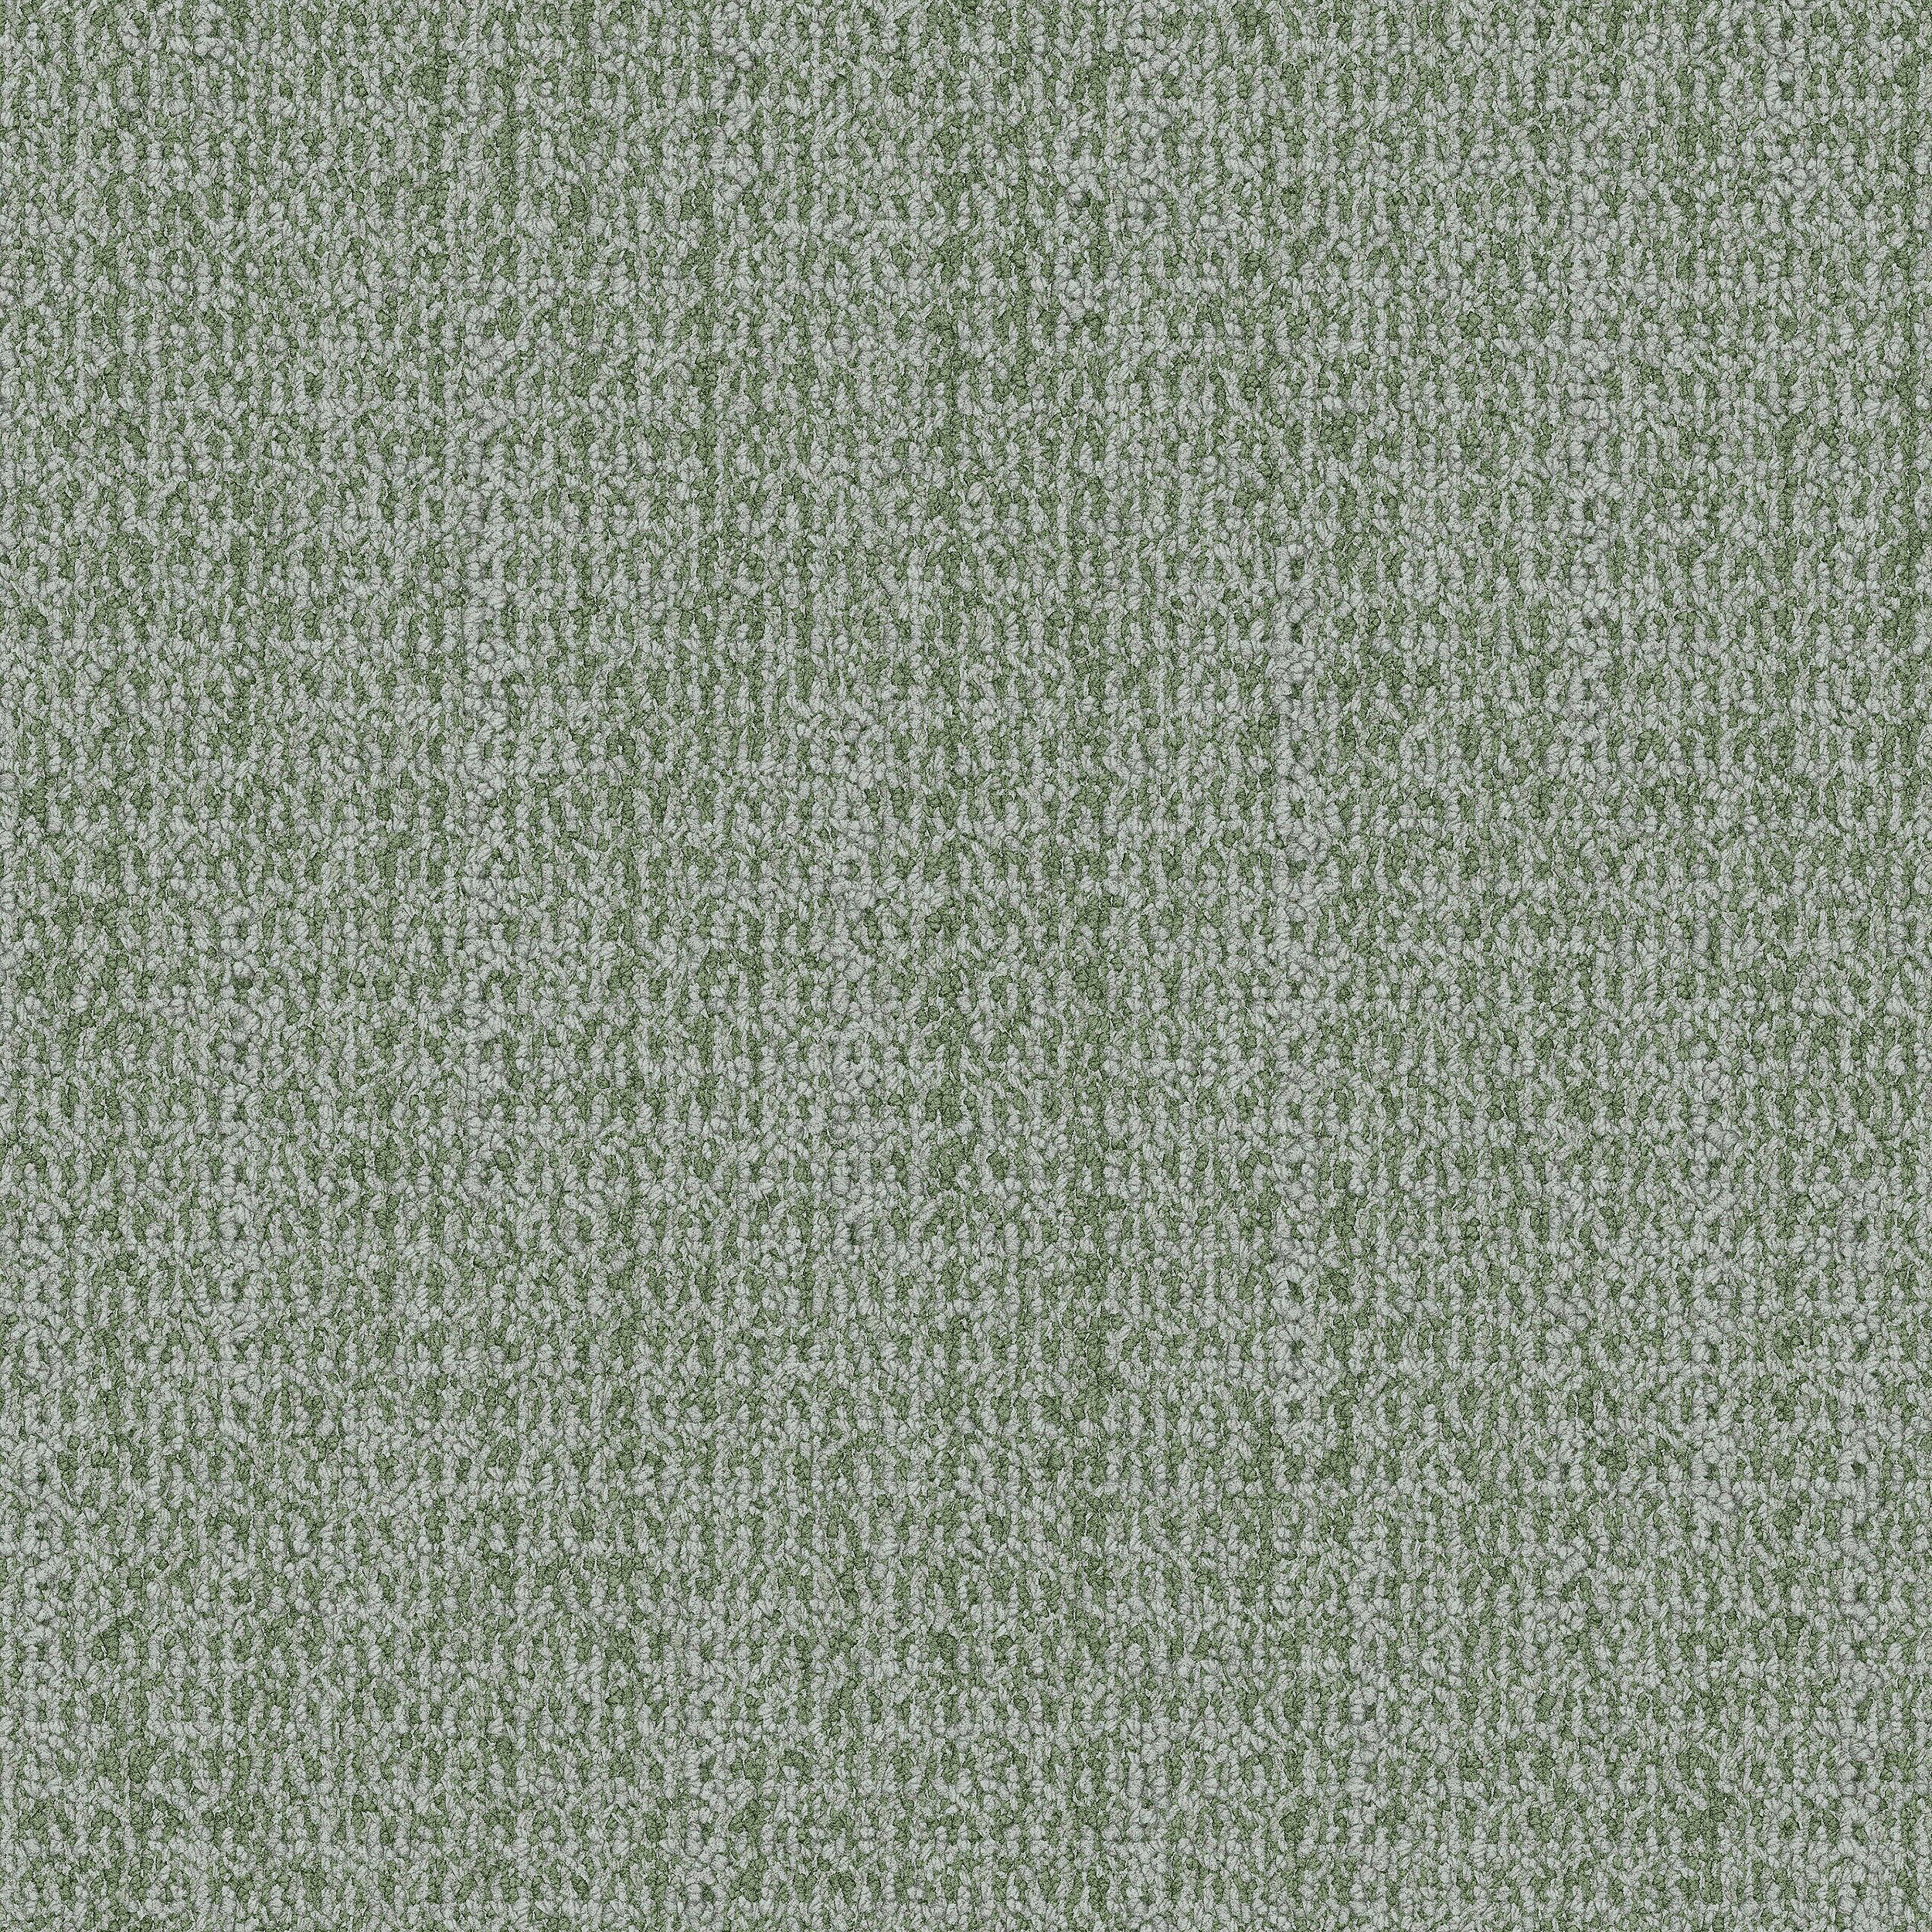 WG100 Carpet Tile In Sage número de imagen 1